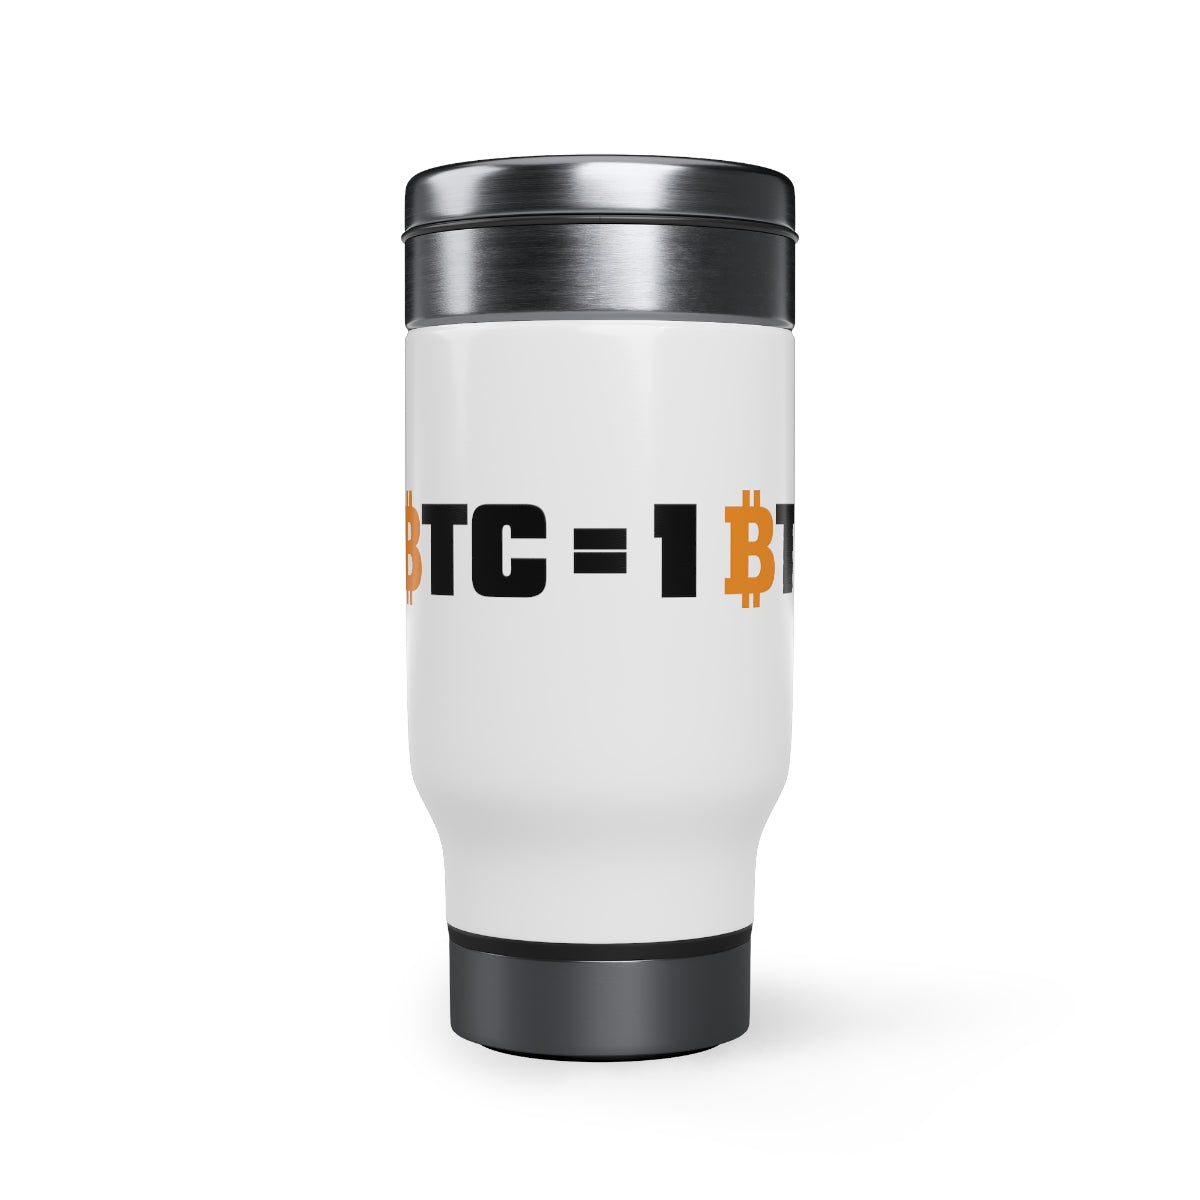 1 BTC Stainless Steel Travel Mug with Handle, 14oz